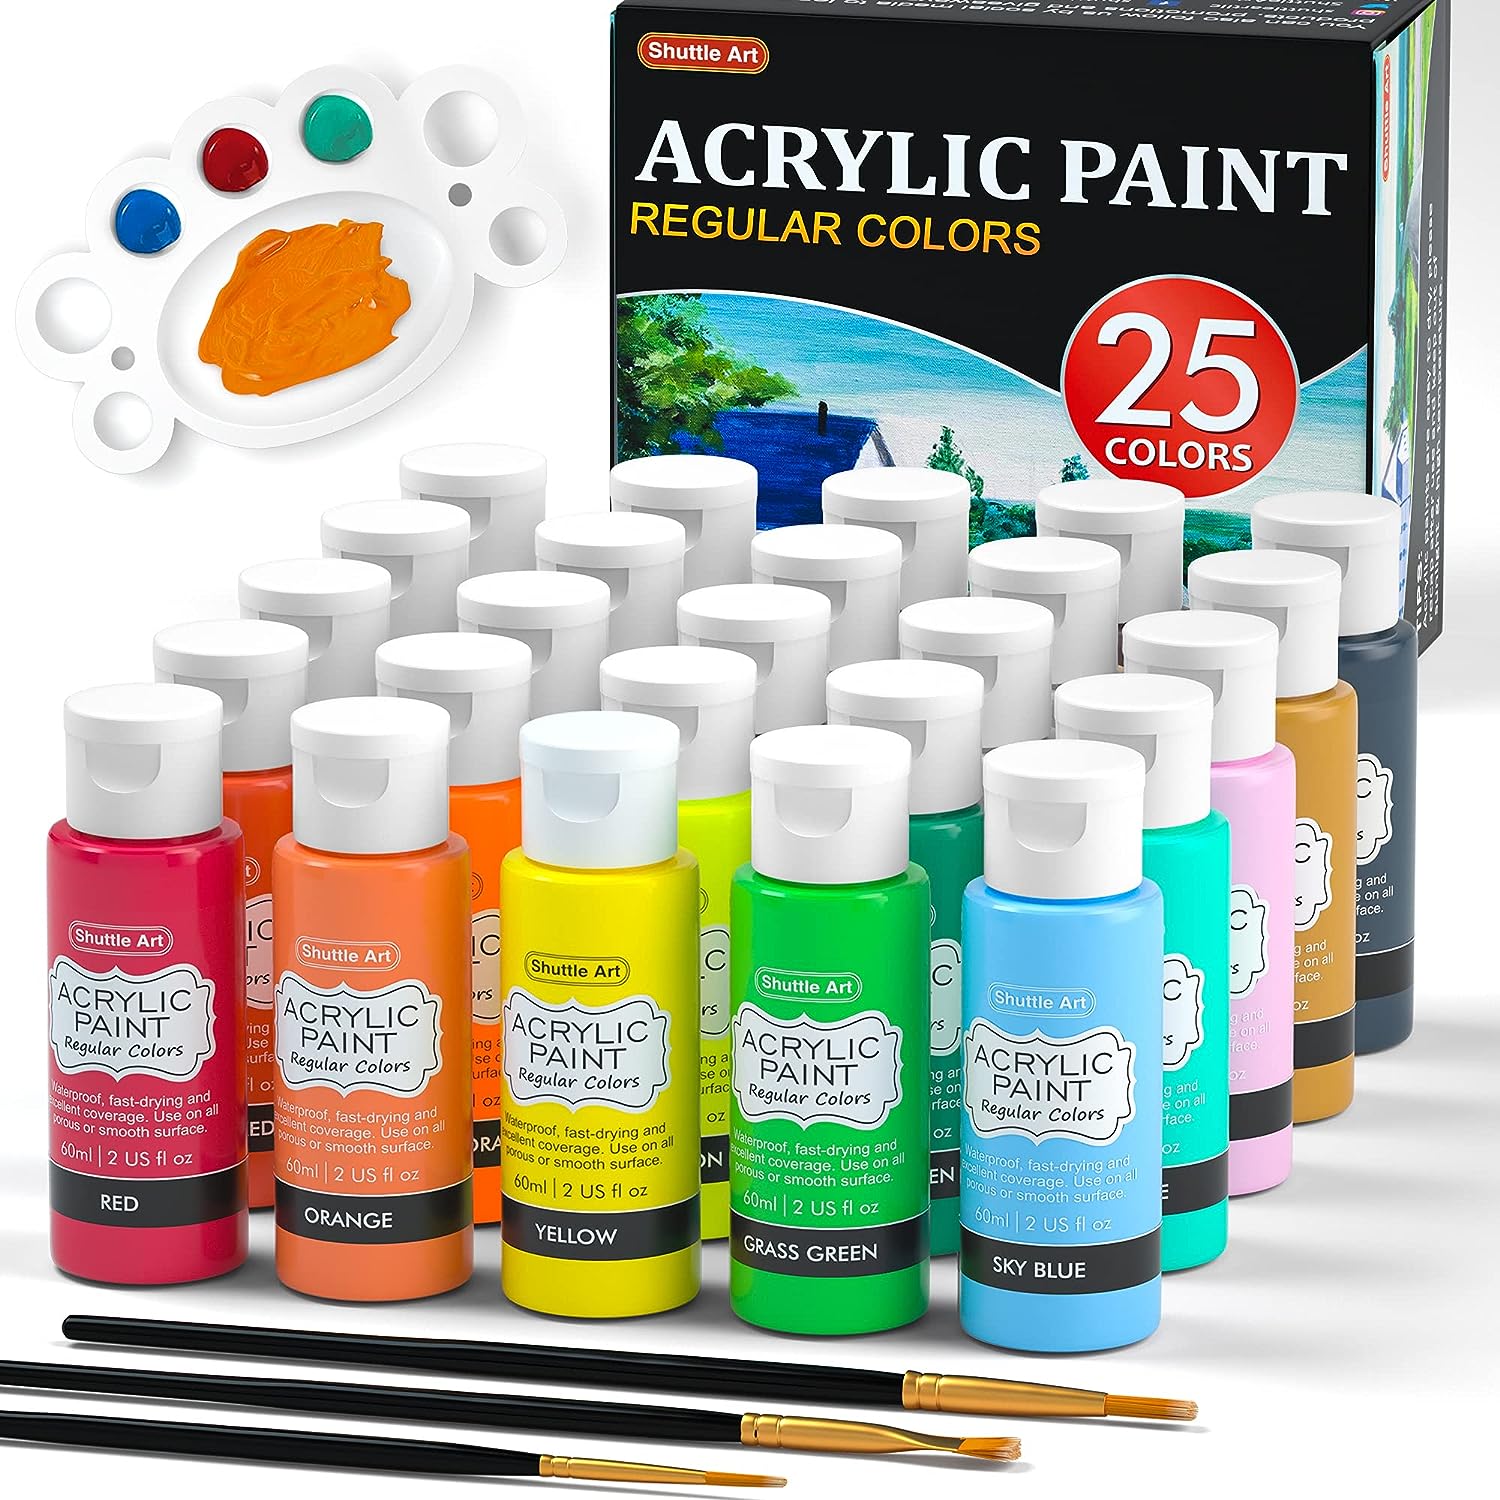 Shuttle Art Acrylic Paint, 25 Colors Acrylic Paint [...]